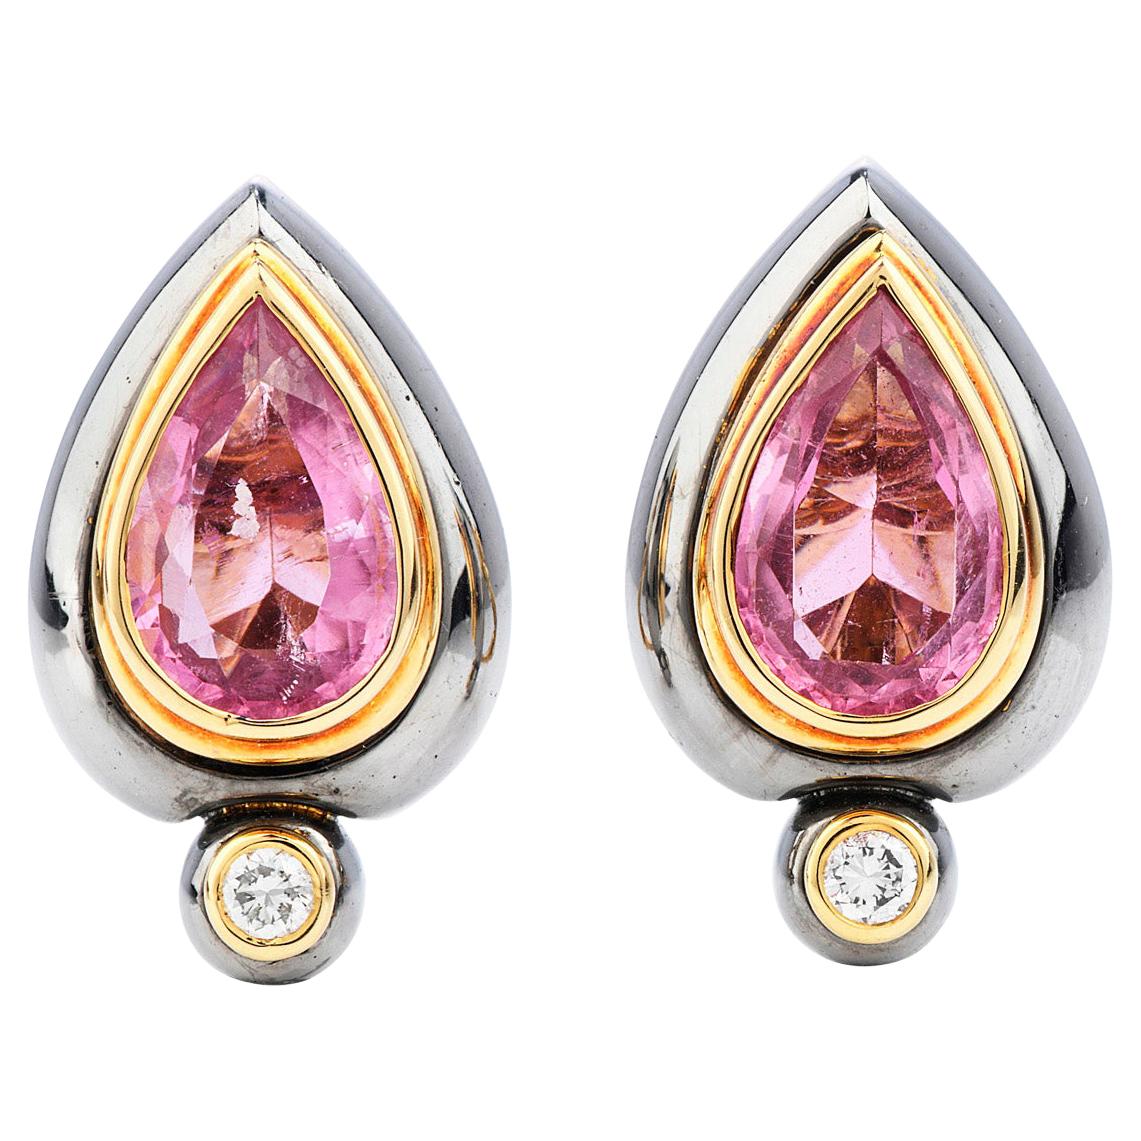 Sterle Paris Tourmaline Diamonds 18K French Clip on Earrings